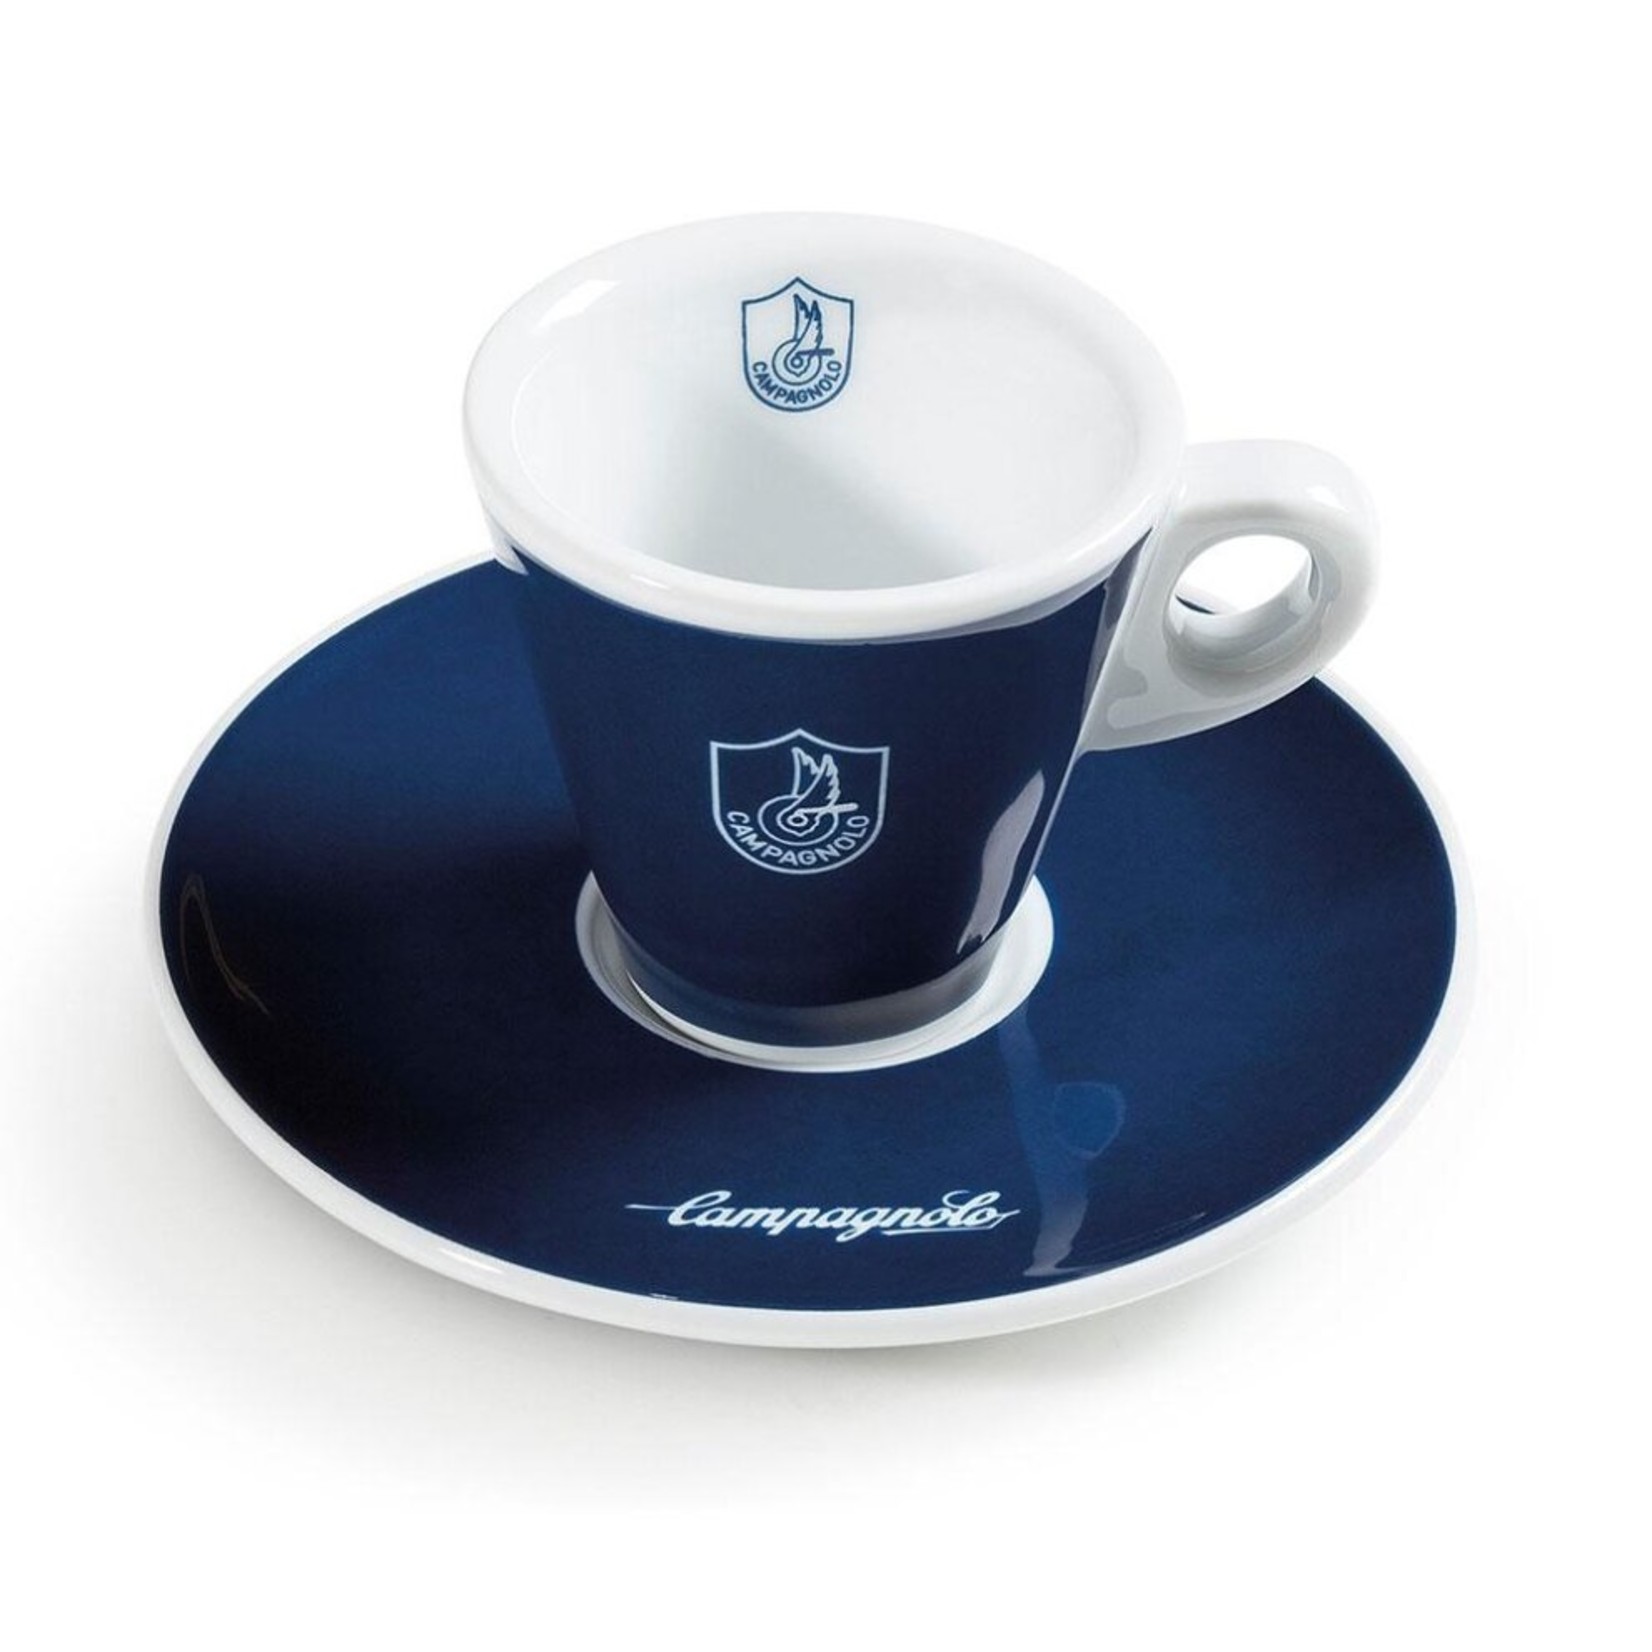 Campagnolo Campagnolo Espresso Coffee Cups x2